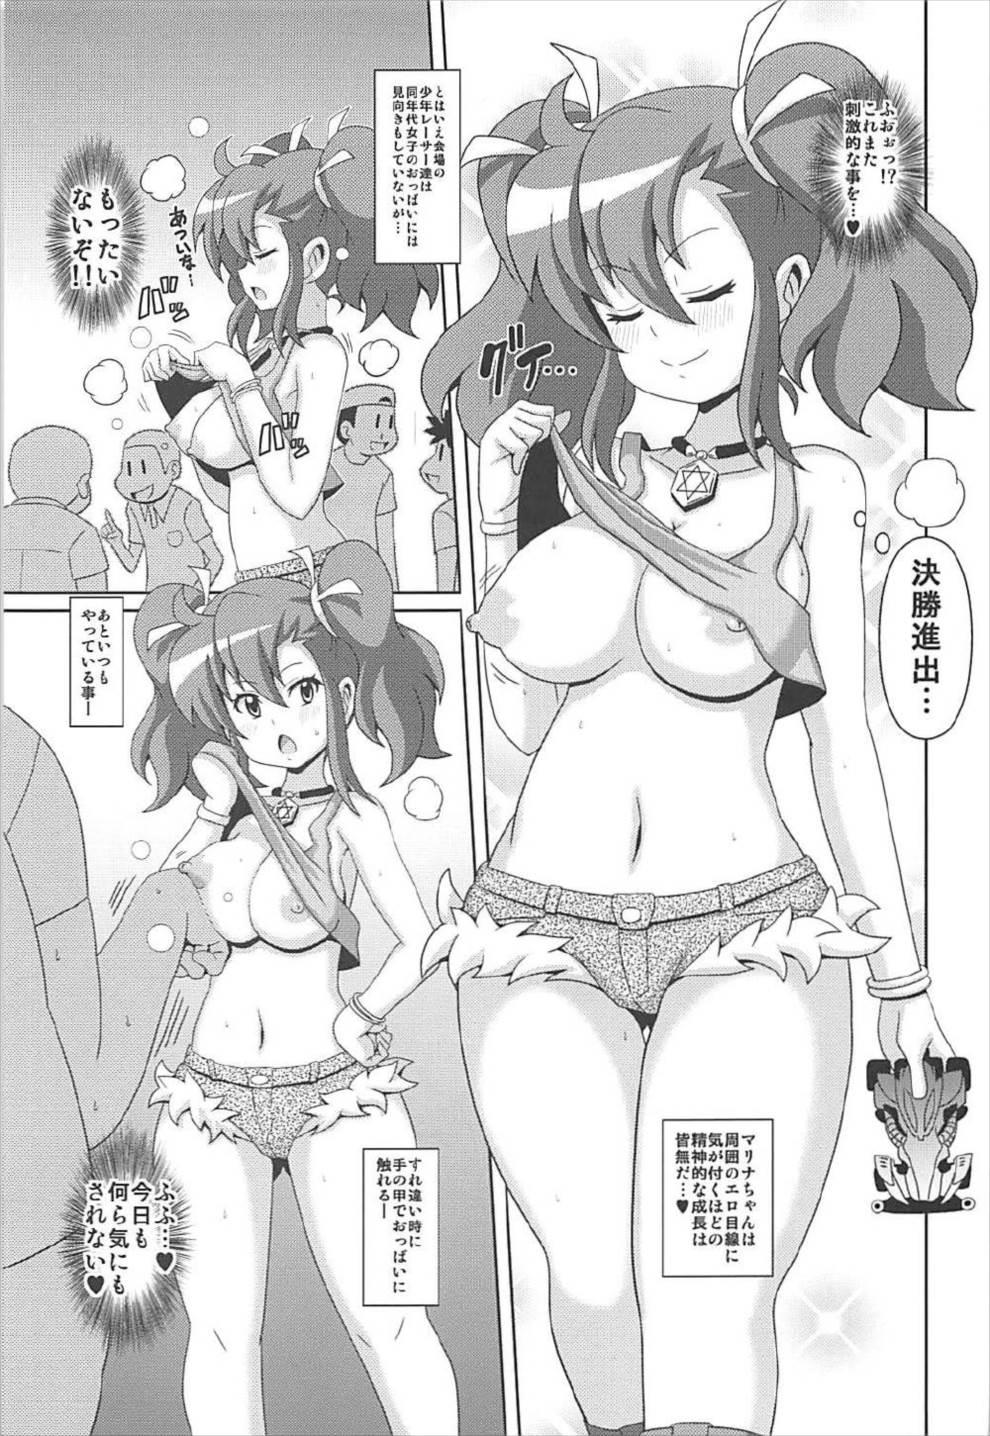 Bubblebutt "Ogami Marina Sukidarake" - Bakusou kyoudai lets and go Big Ass - Page 6